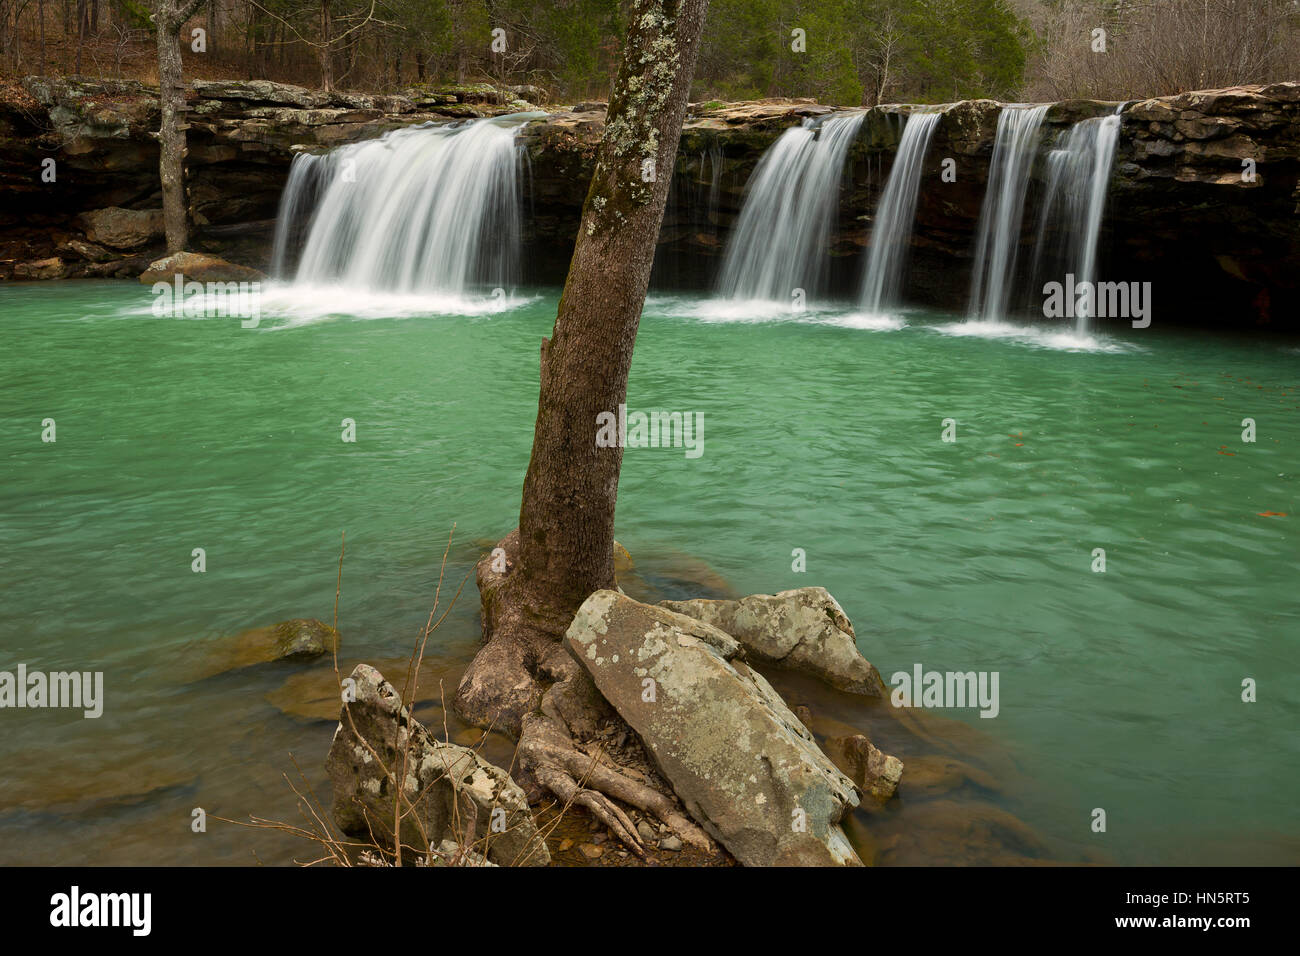 Falling Water Falls along Falling Water Creek in Arkansas in the spring. USA. Stock Photo